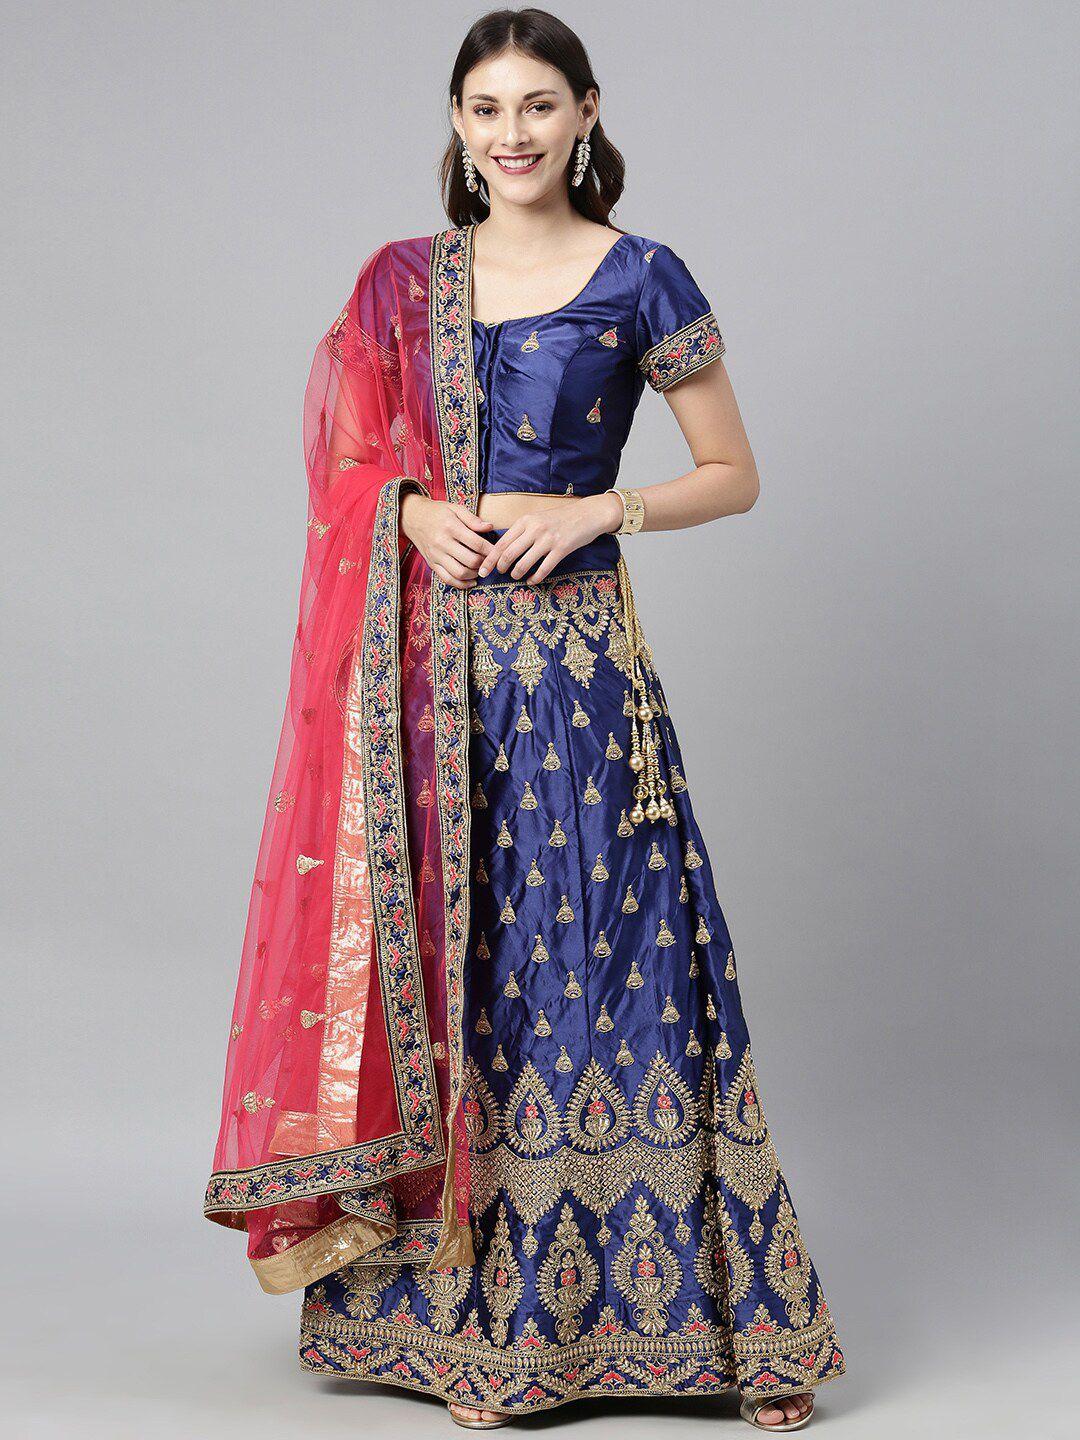 the-chennai-silks-navy-blue-&-red-embroidered-ready-to-wear-lehenga-choli-with-dupatta